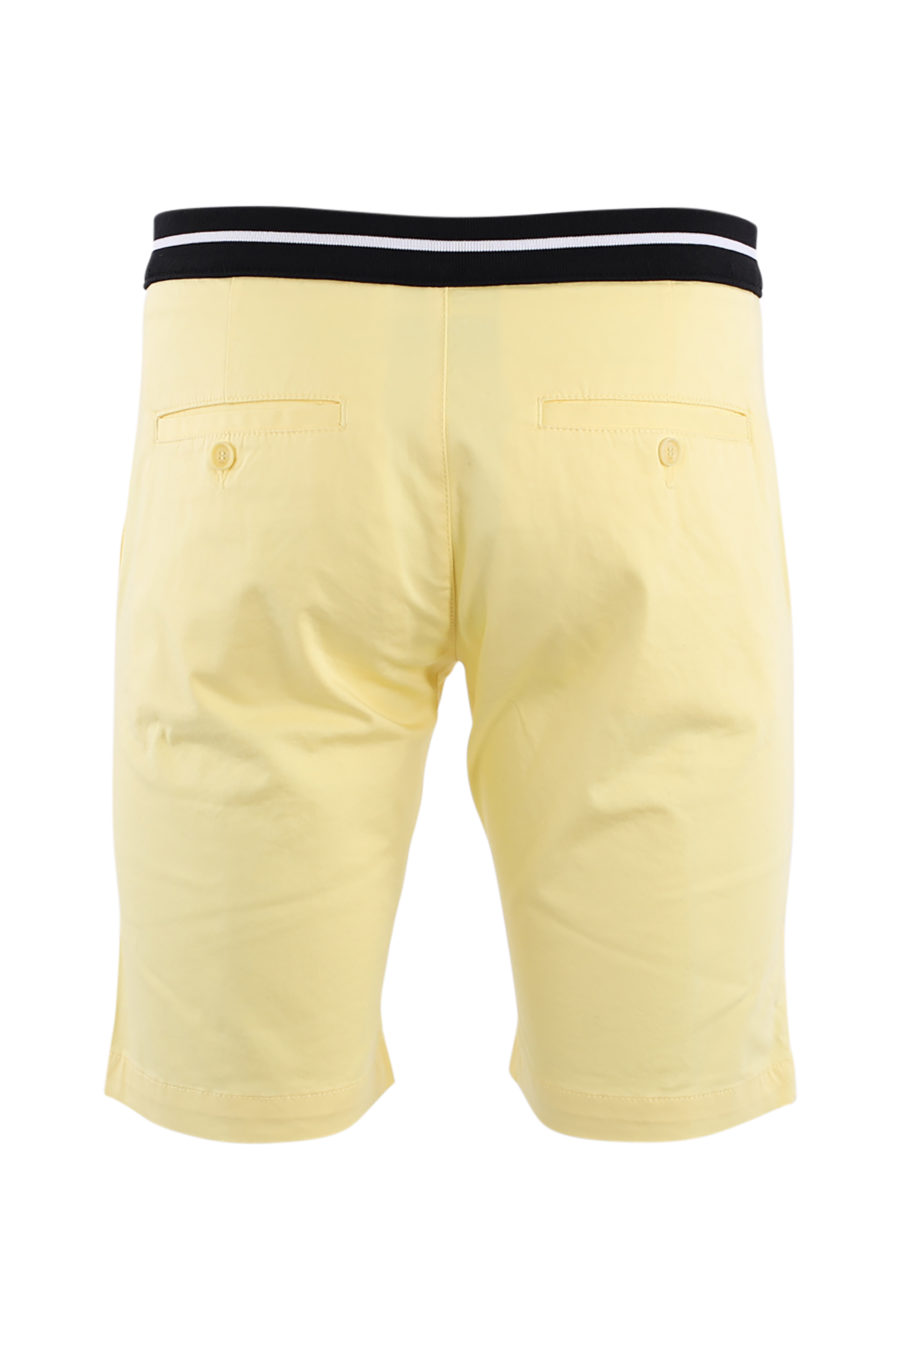 Yellow shorts - IMG 8854